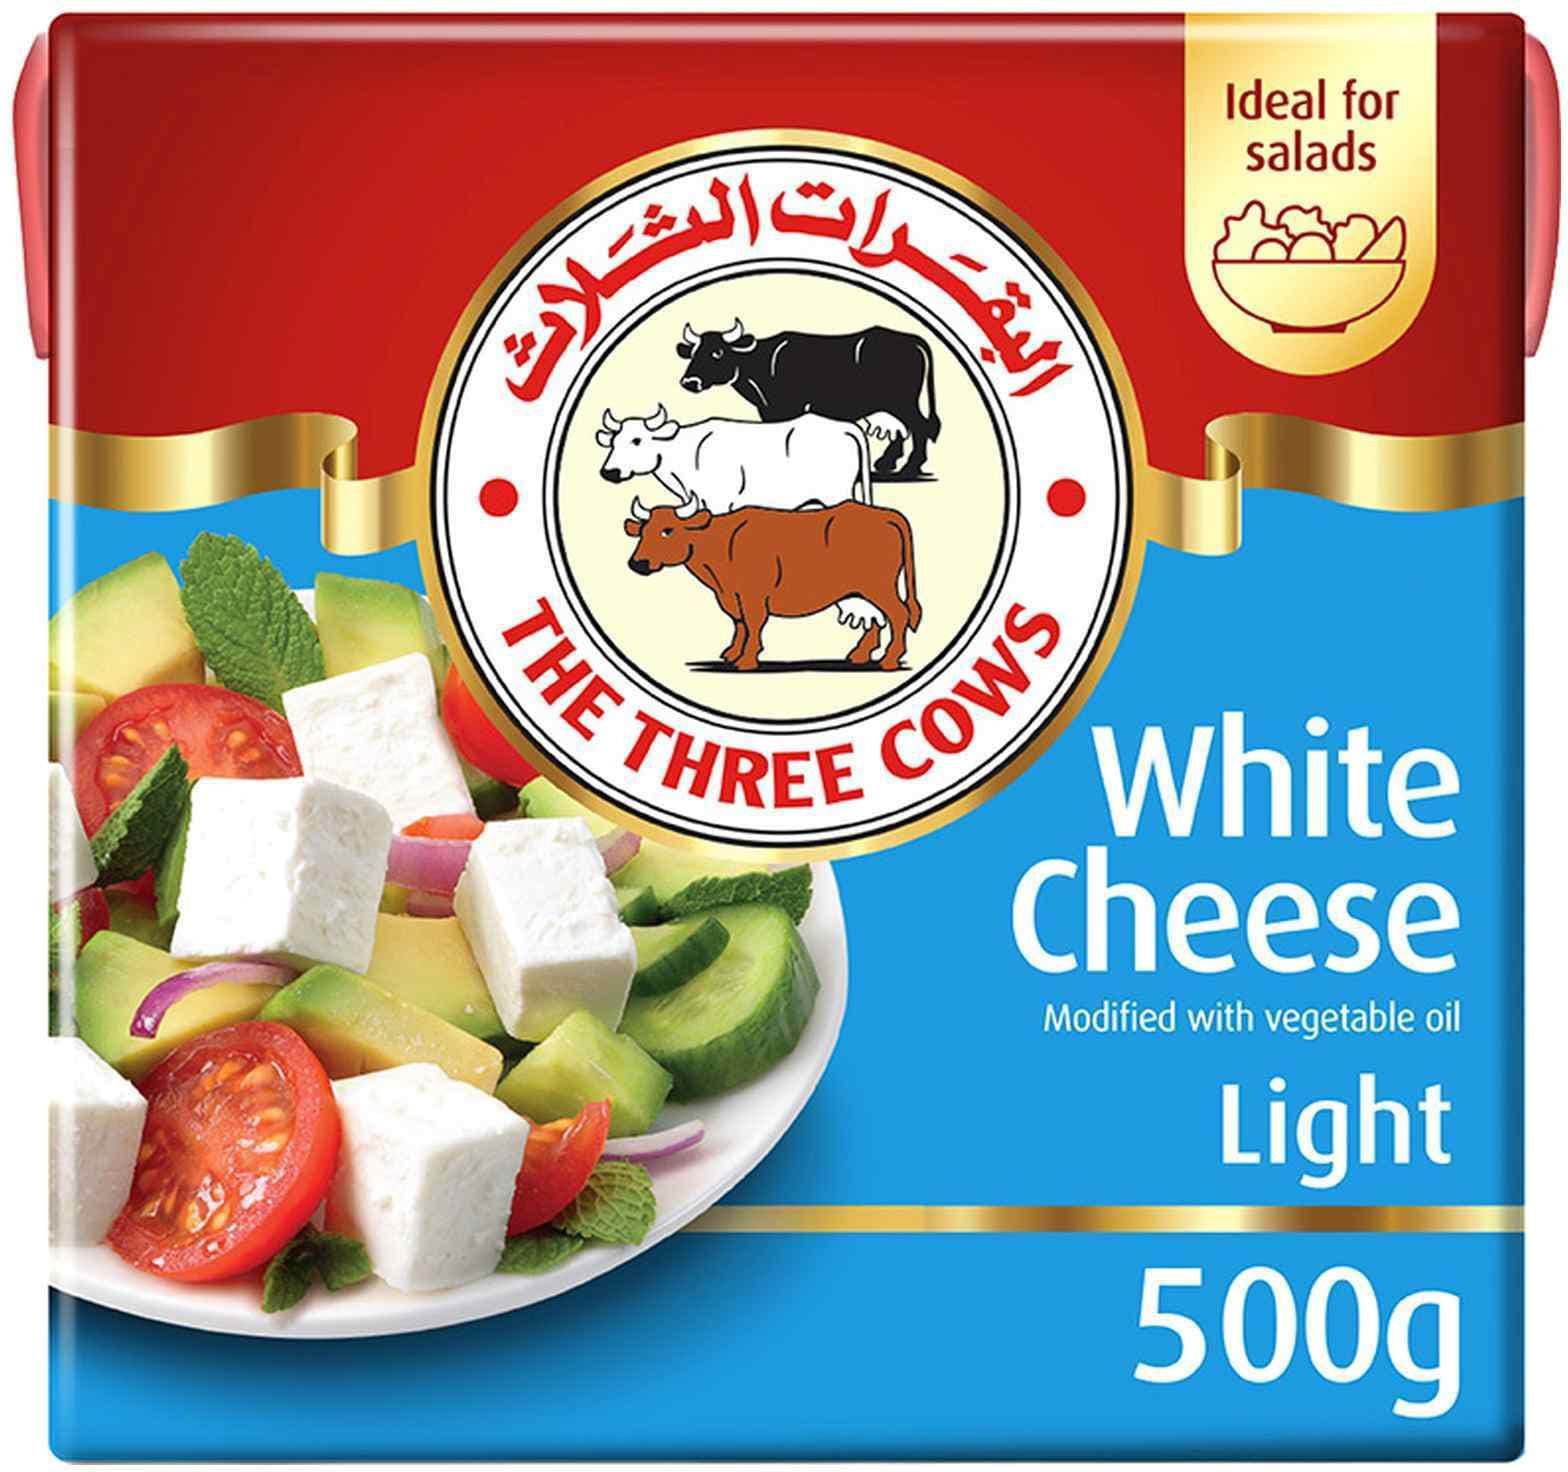 The Three Cows White Cheese Light 500g